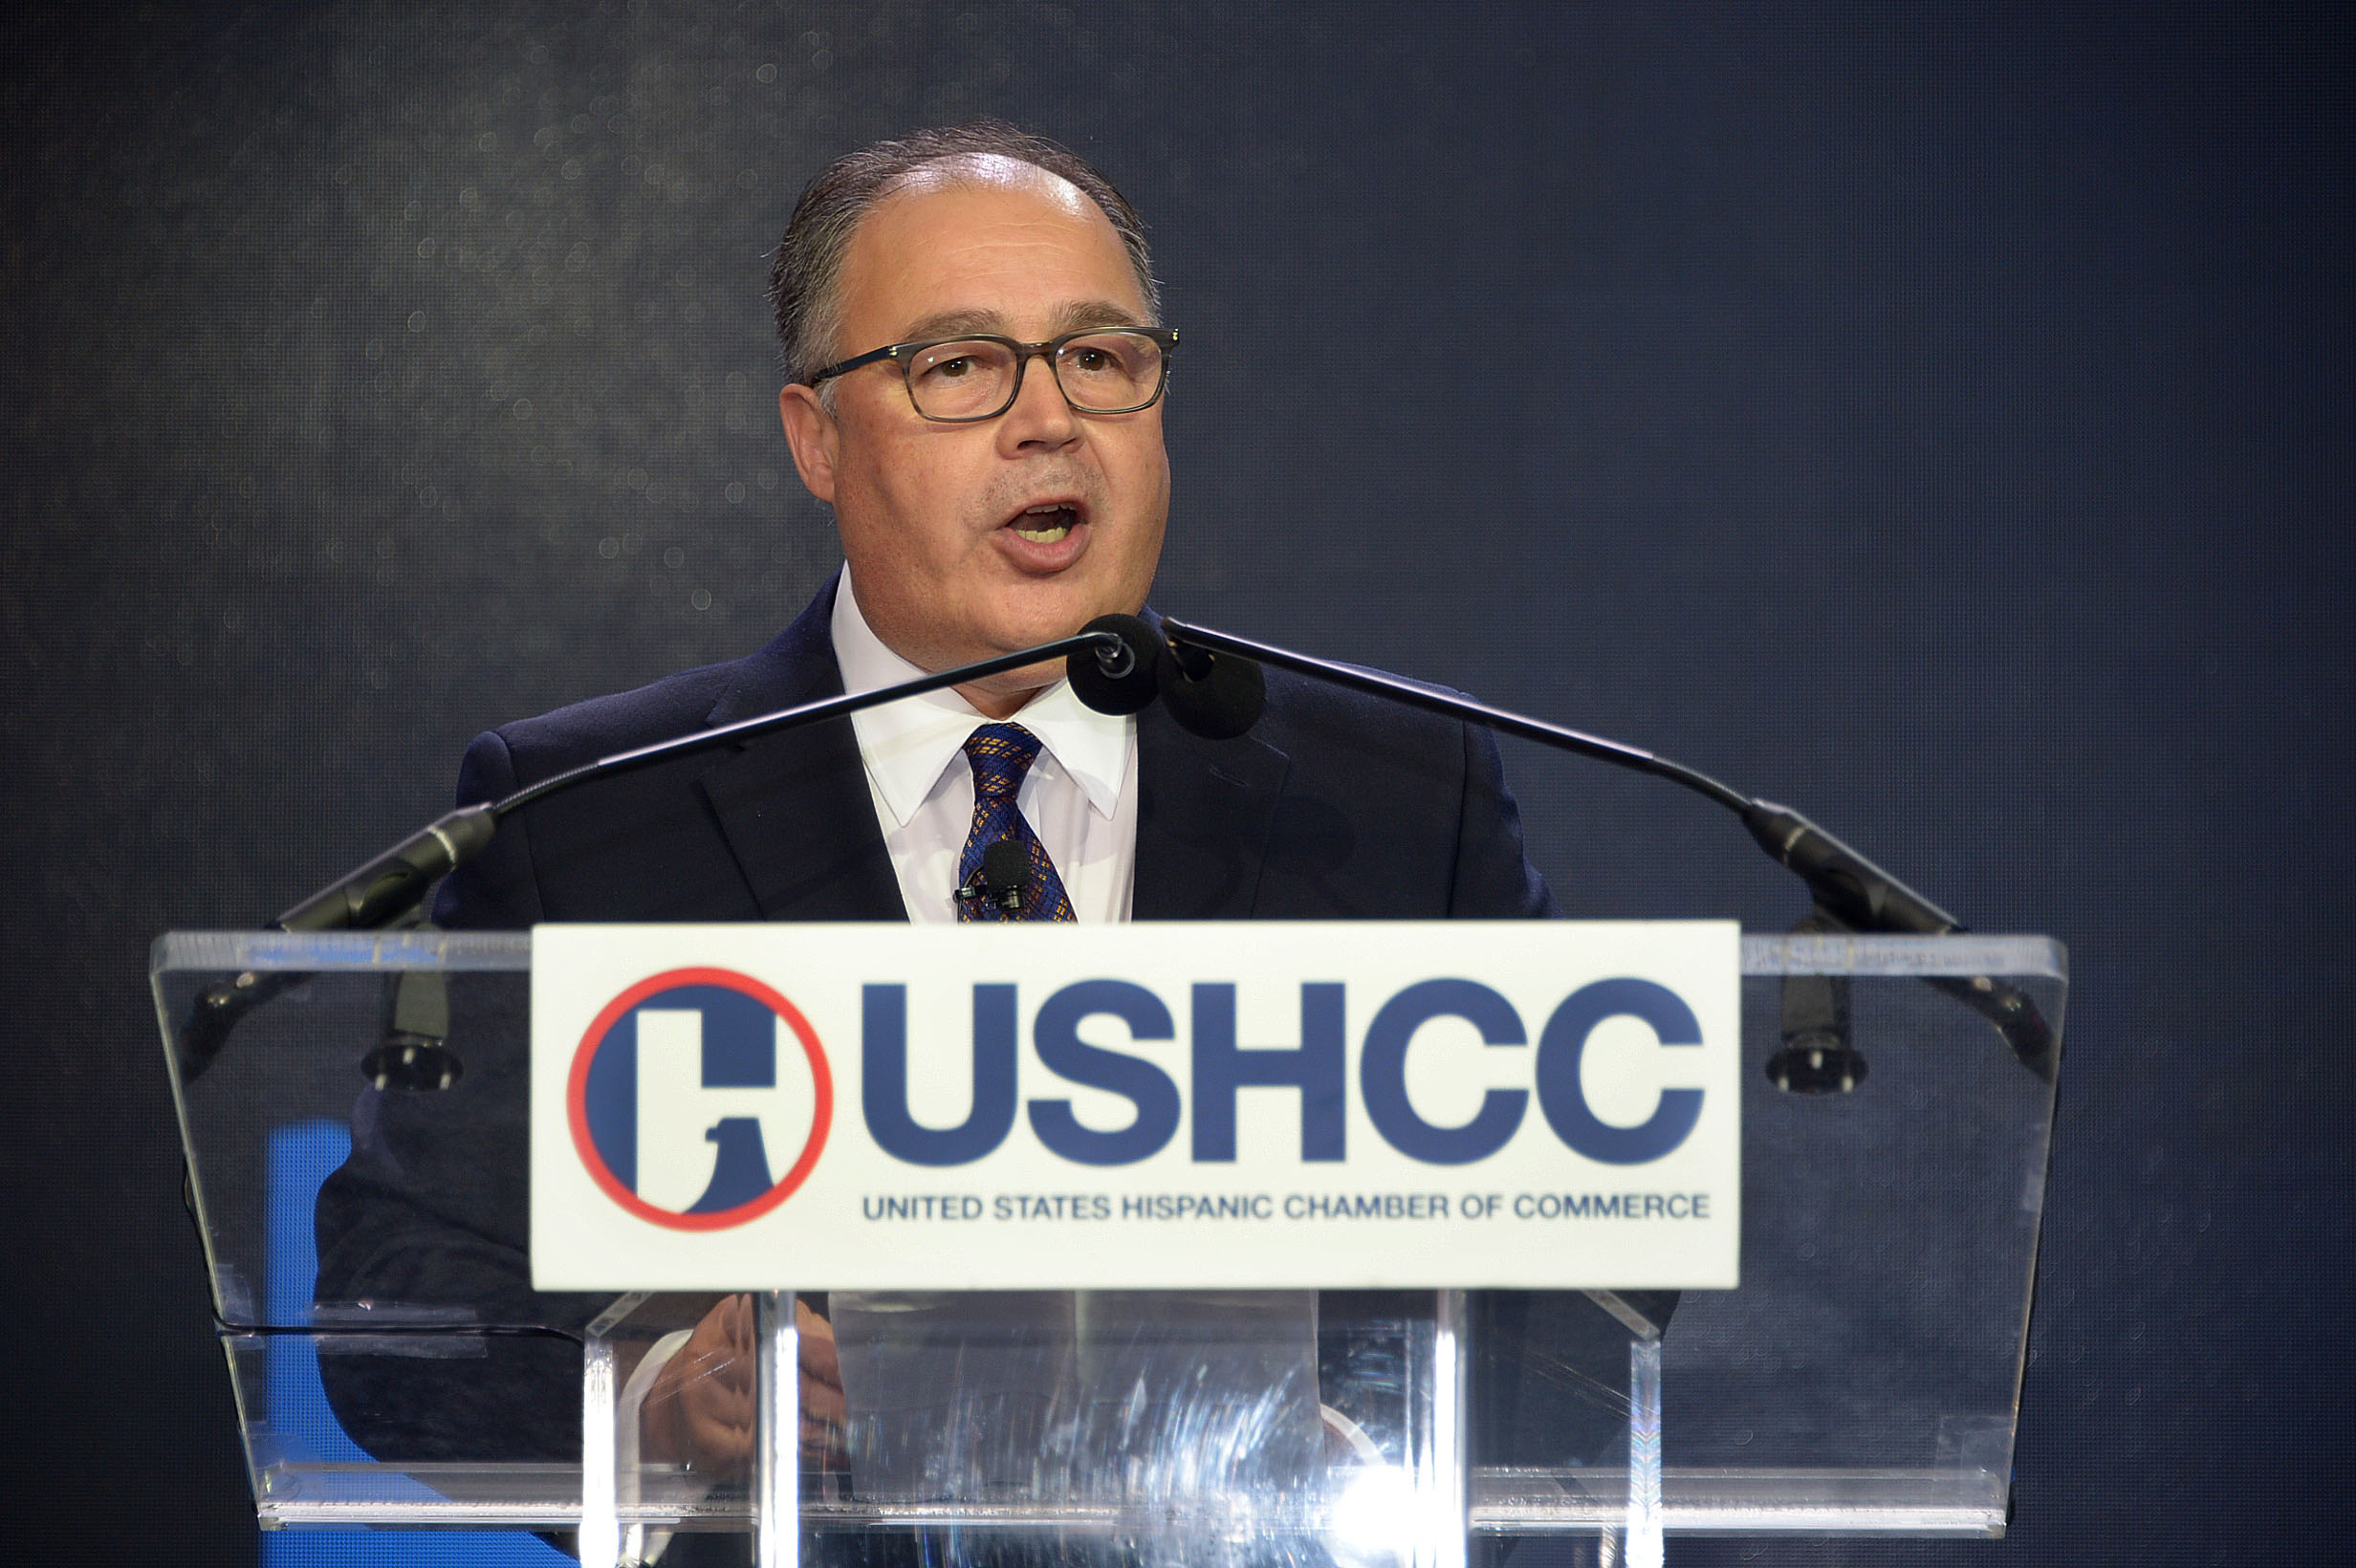 President & CEO of the U.S. Hispanic Chamber of Commerce Ramiro Cavazos. Photo: Peter Fitzpatrick / AL DÍA News